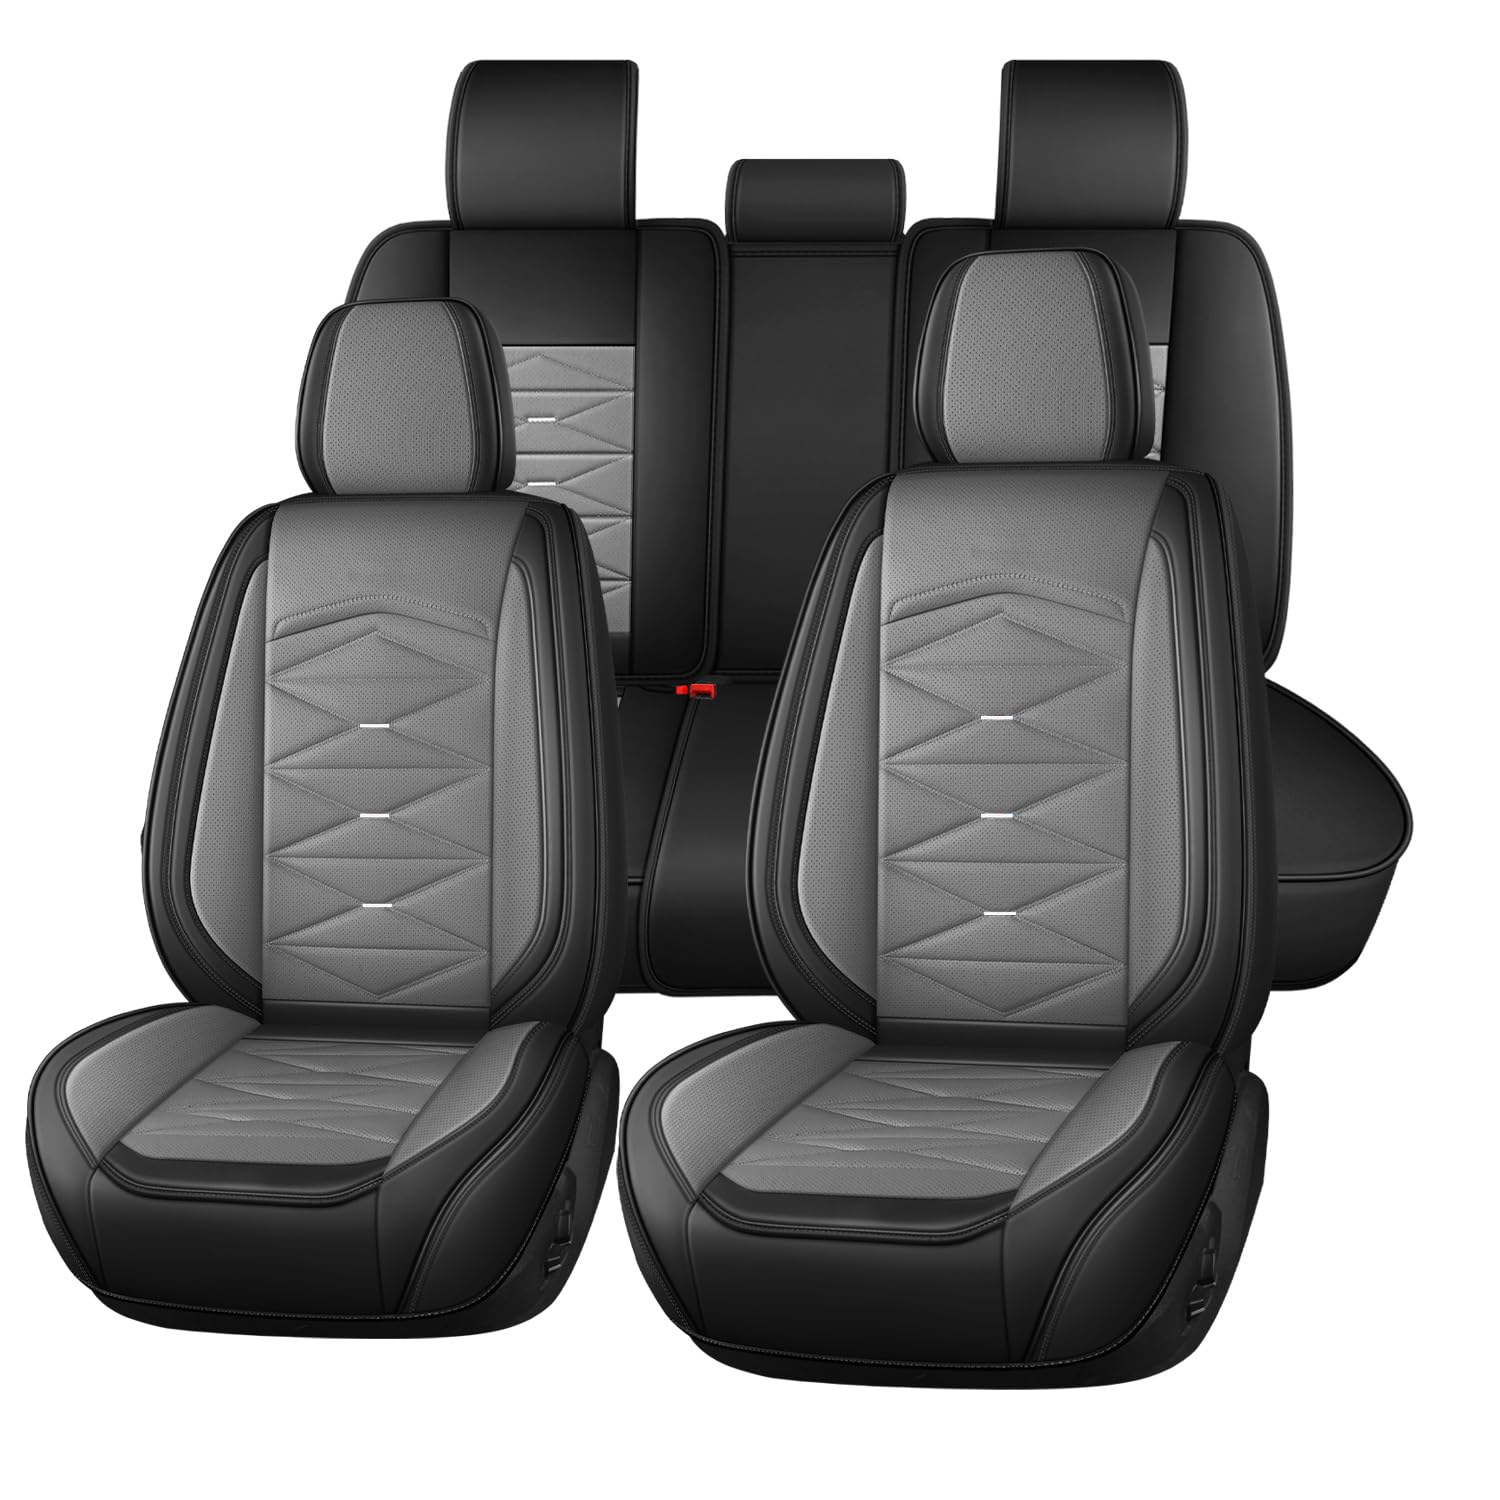 Buuoo Autositzbezüge Universal passend für MG MG3 MG5 MG6 MG7 GT ZS HS RX5 Sitzkissen Schonbezug Set von Buuoo